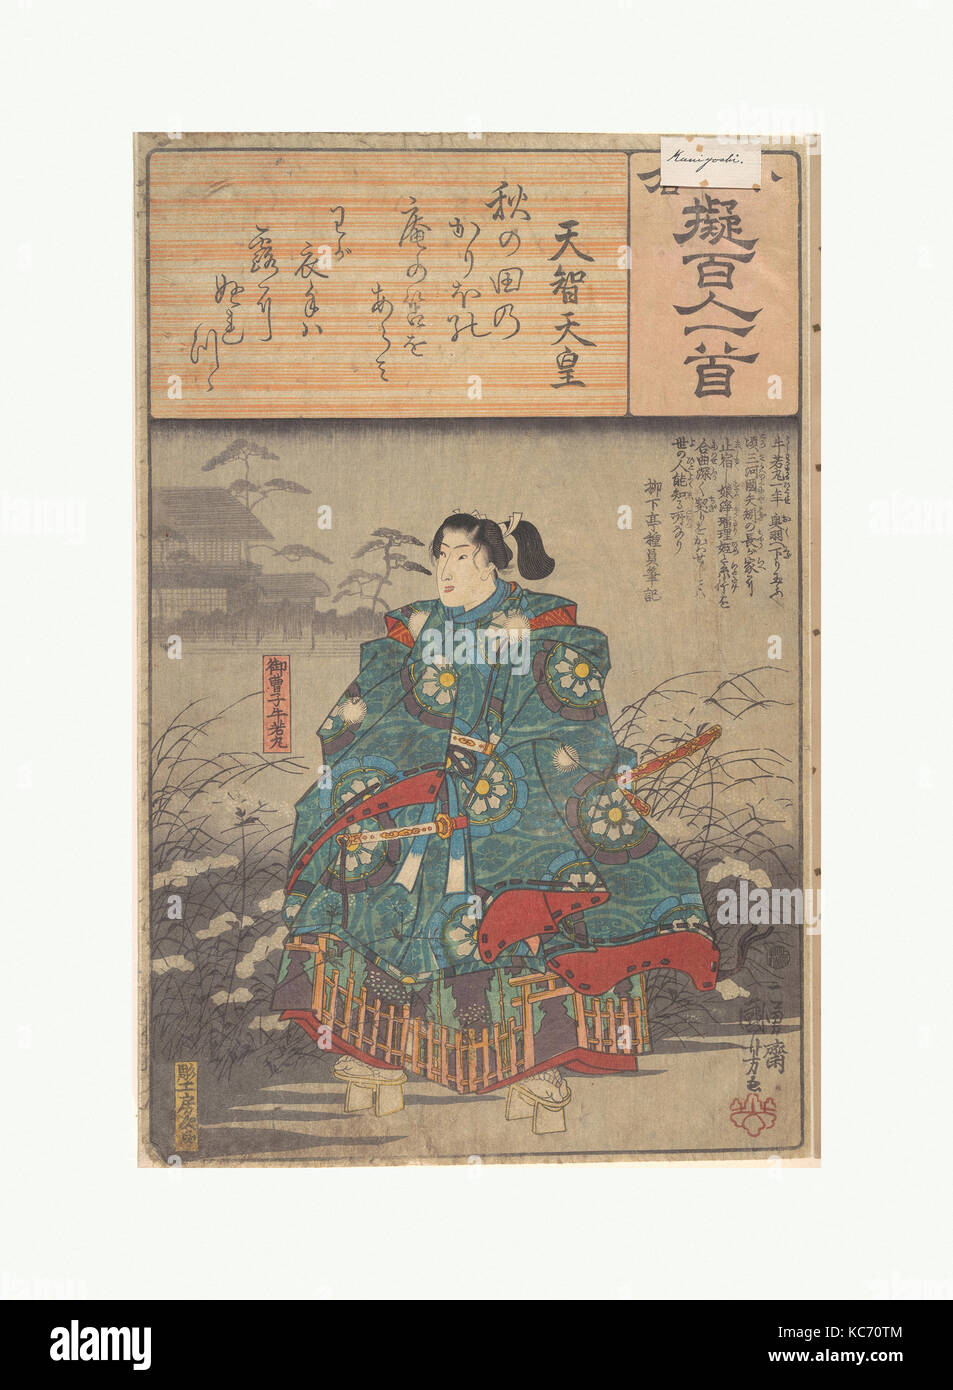 Poesia A Natale Di H Ogura.Ogura Hyakunin Isshu Immagini E Fotos Stock Alamy